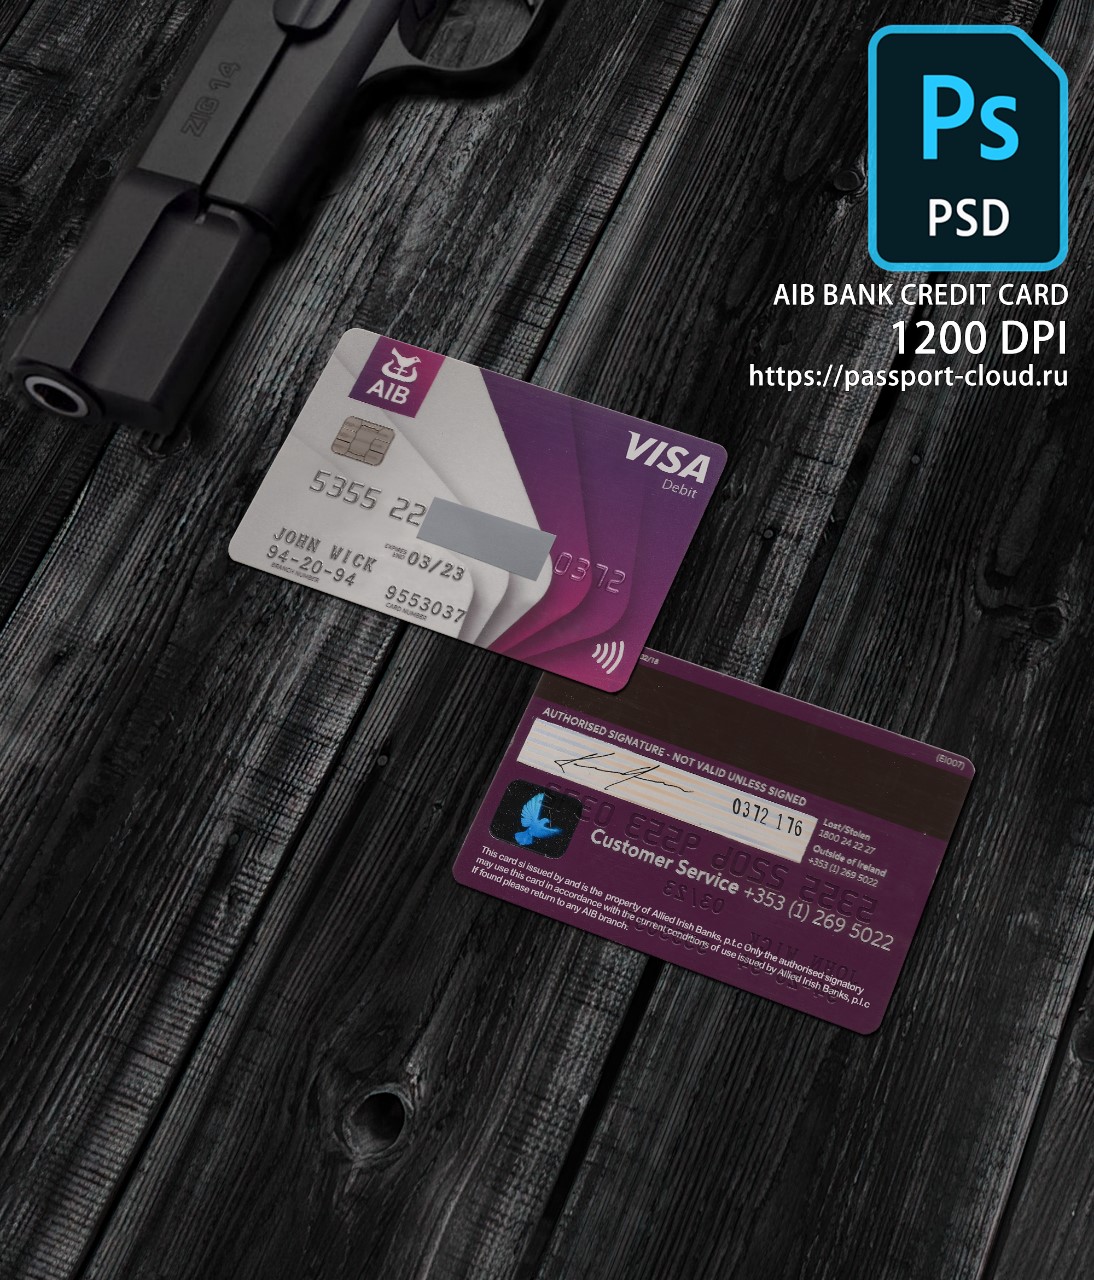 ABI Bank Credit Card PSD1